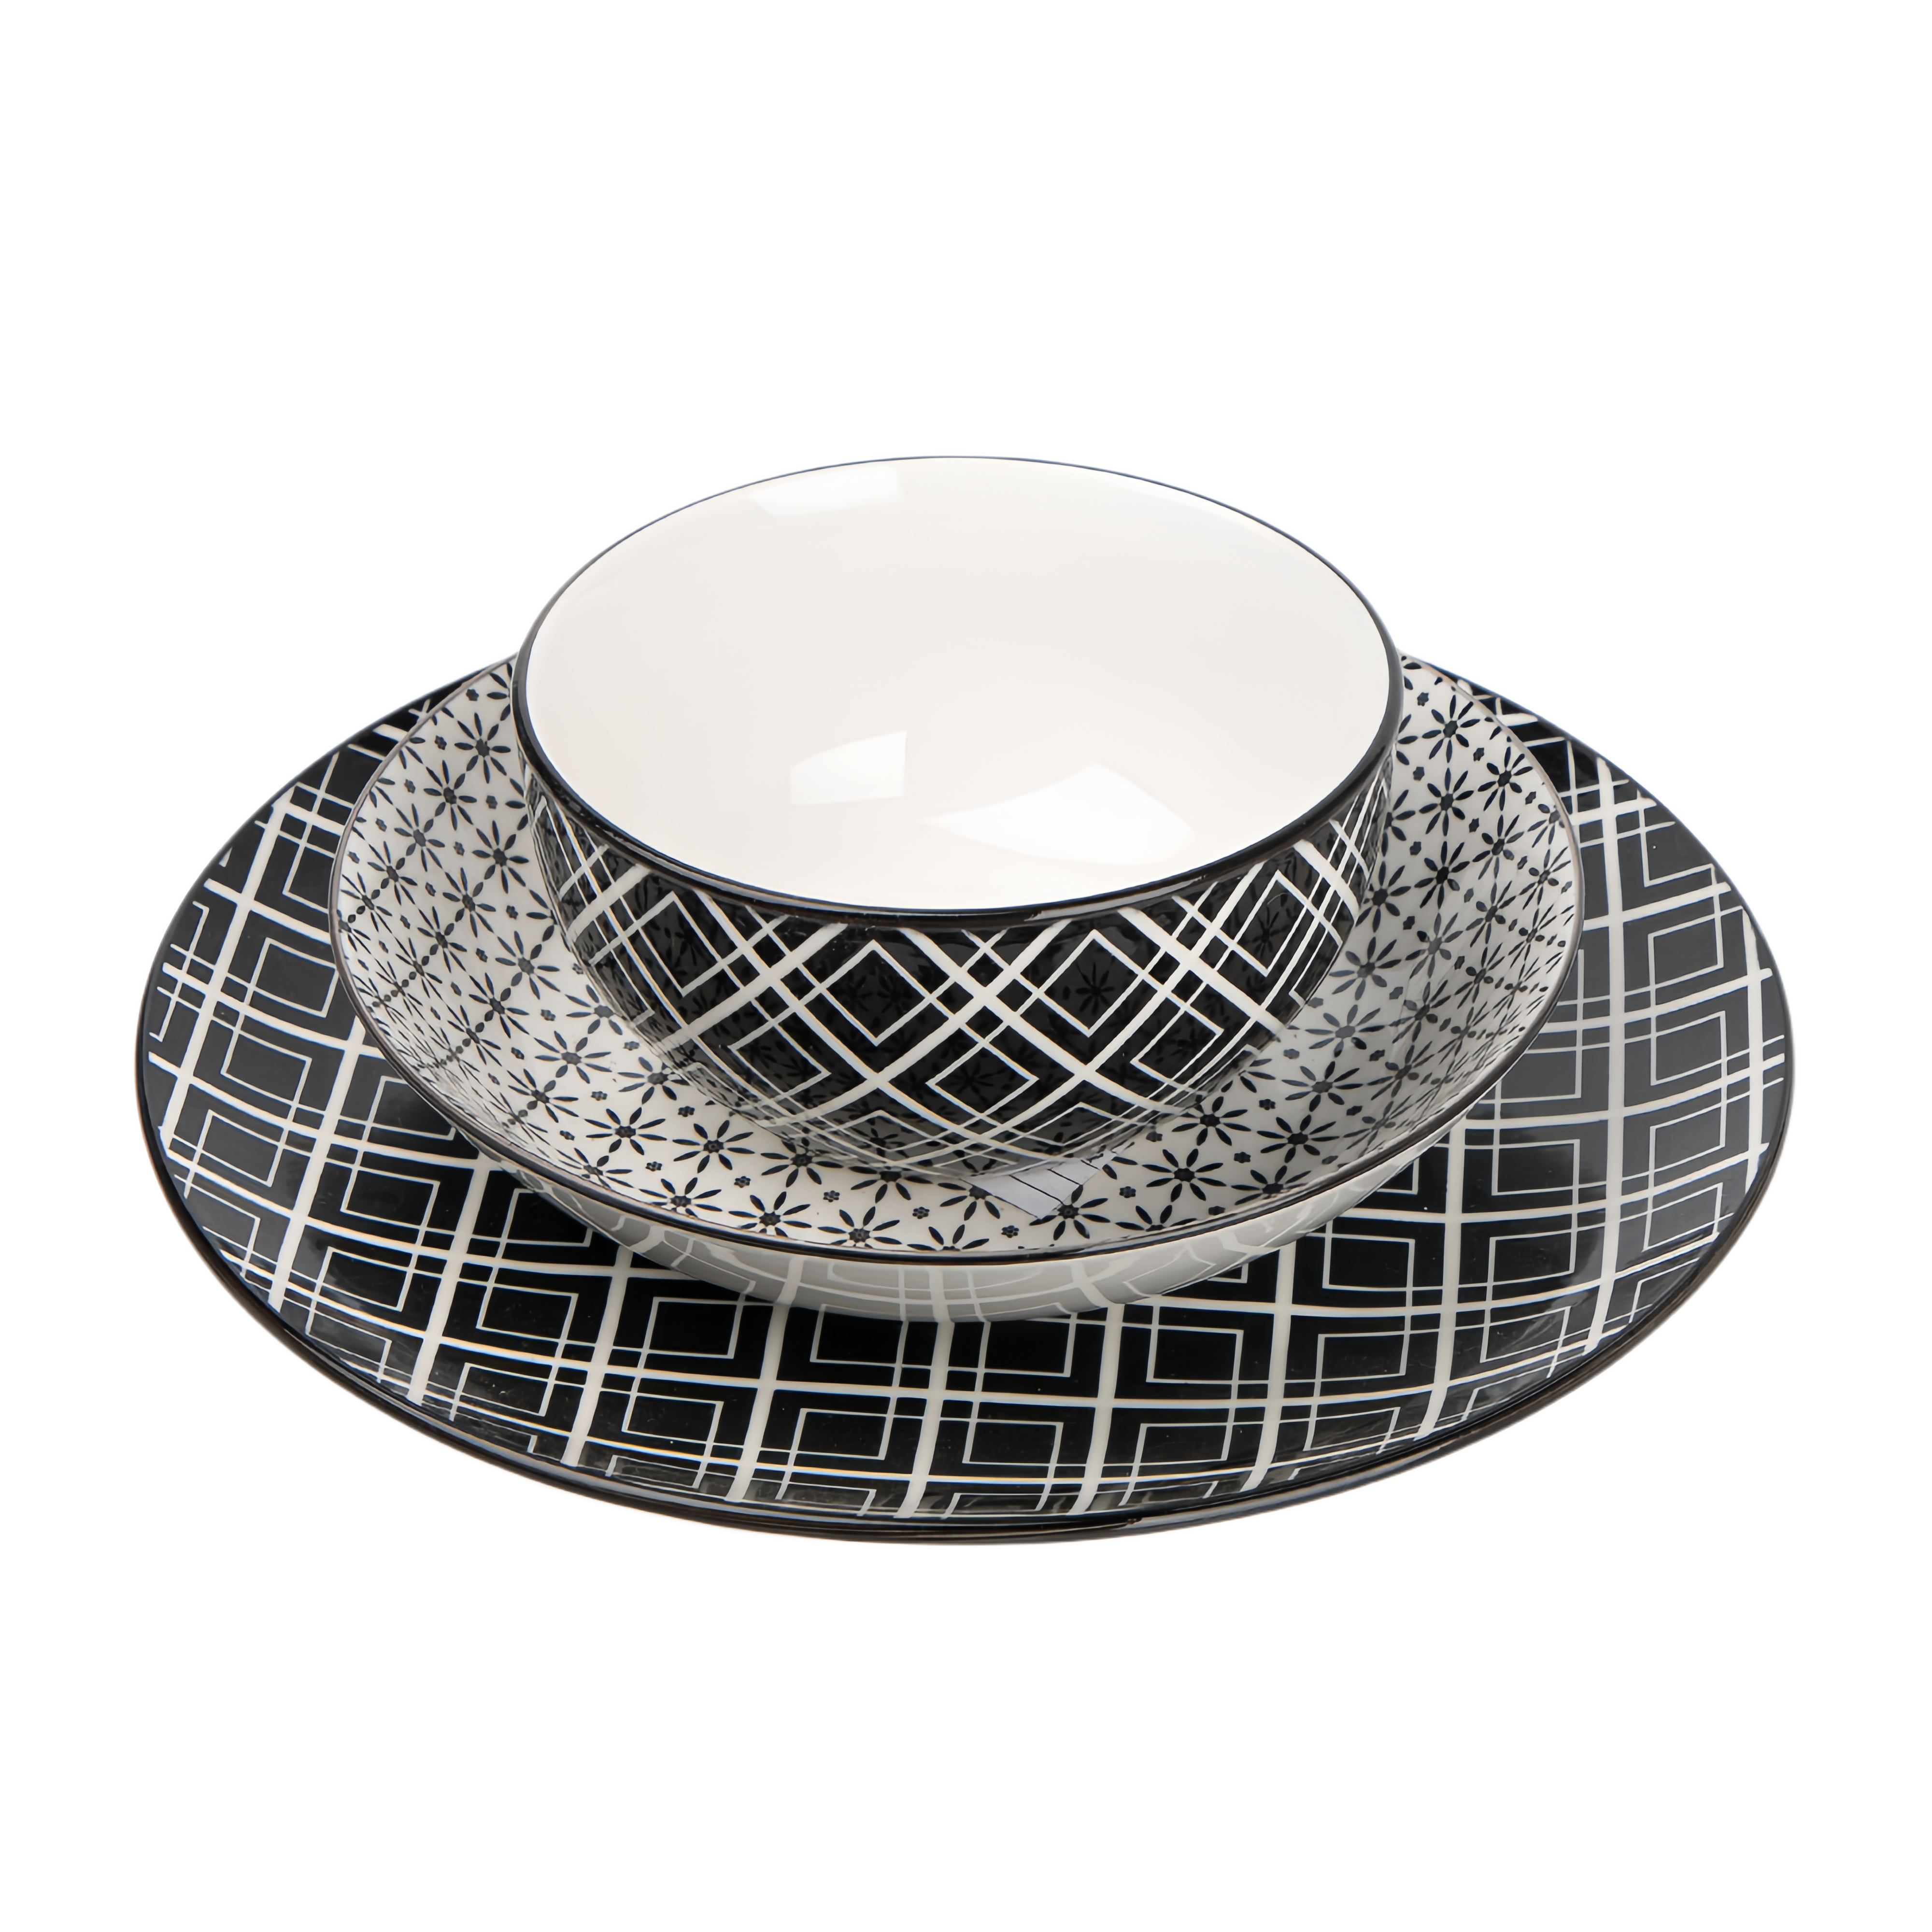 qinge Black and White Ceramic Bowl and Plate Set